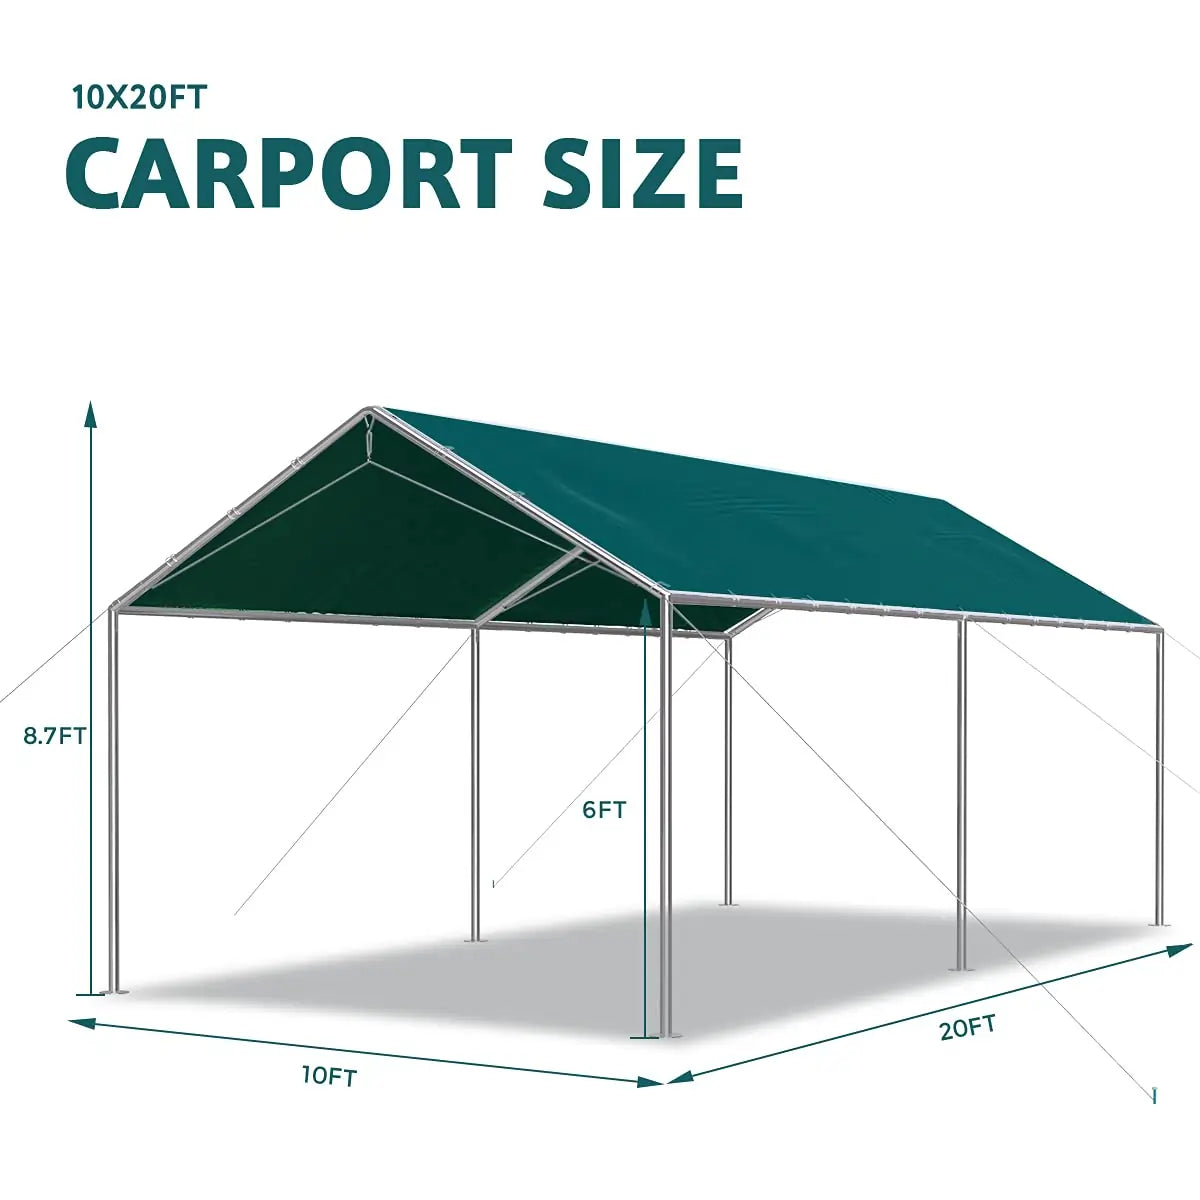 10x20 ft carport size#color_green